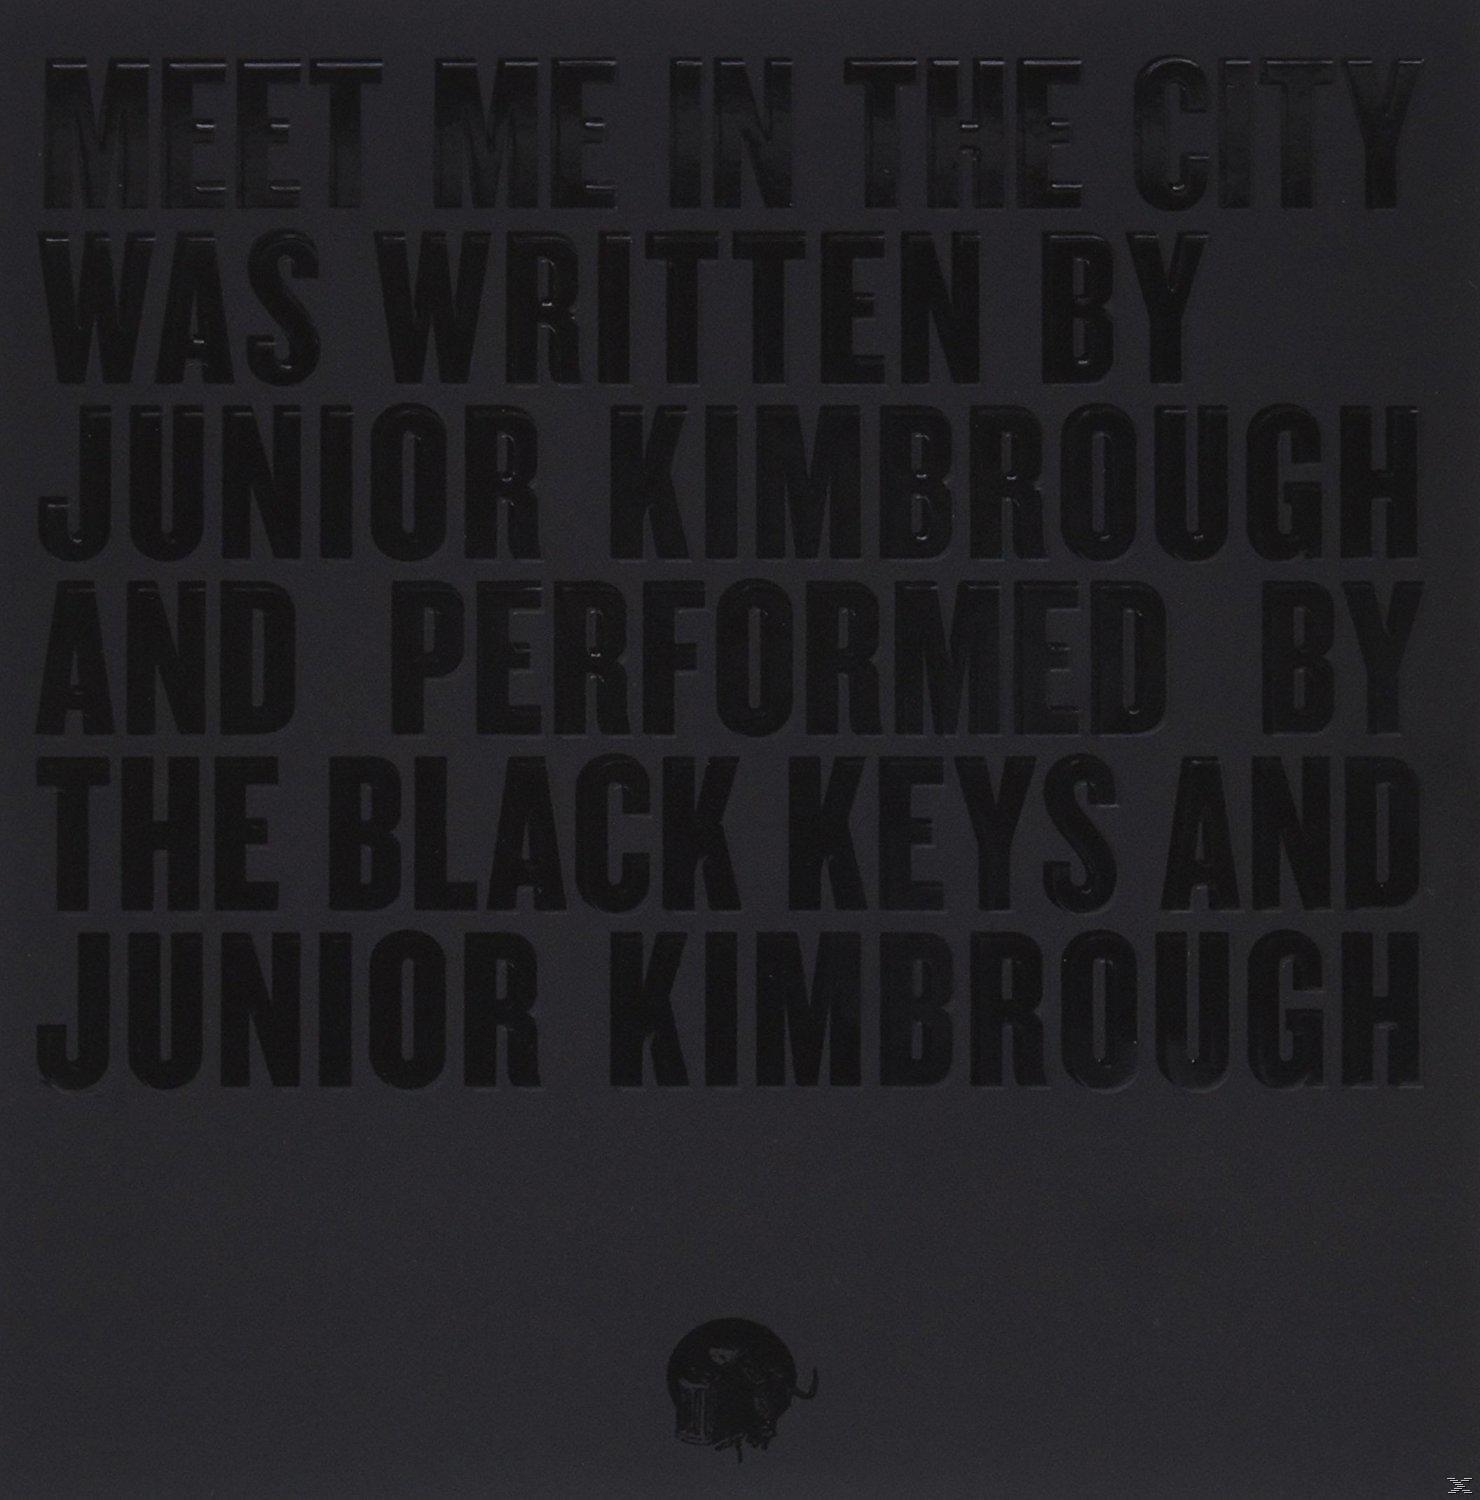 Kimbrough City - - Meet Junior Me (Vinyl) The The In Keys, Black